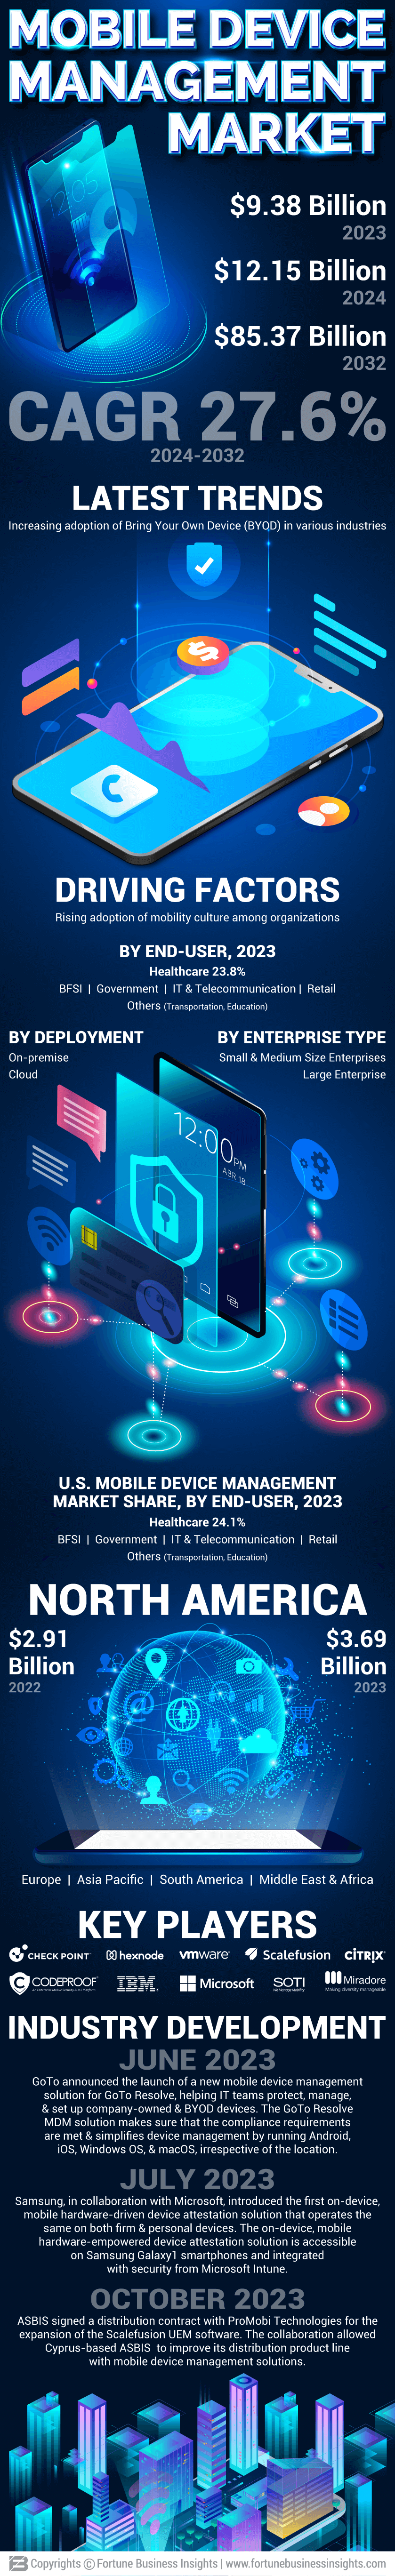 Mobile Device Management Market